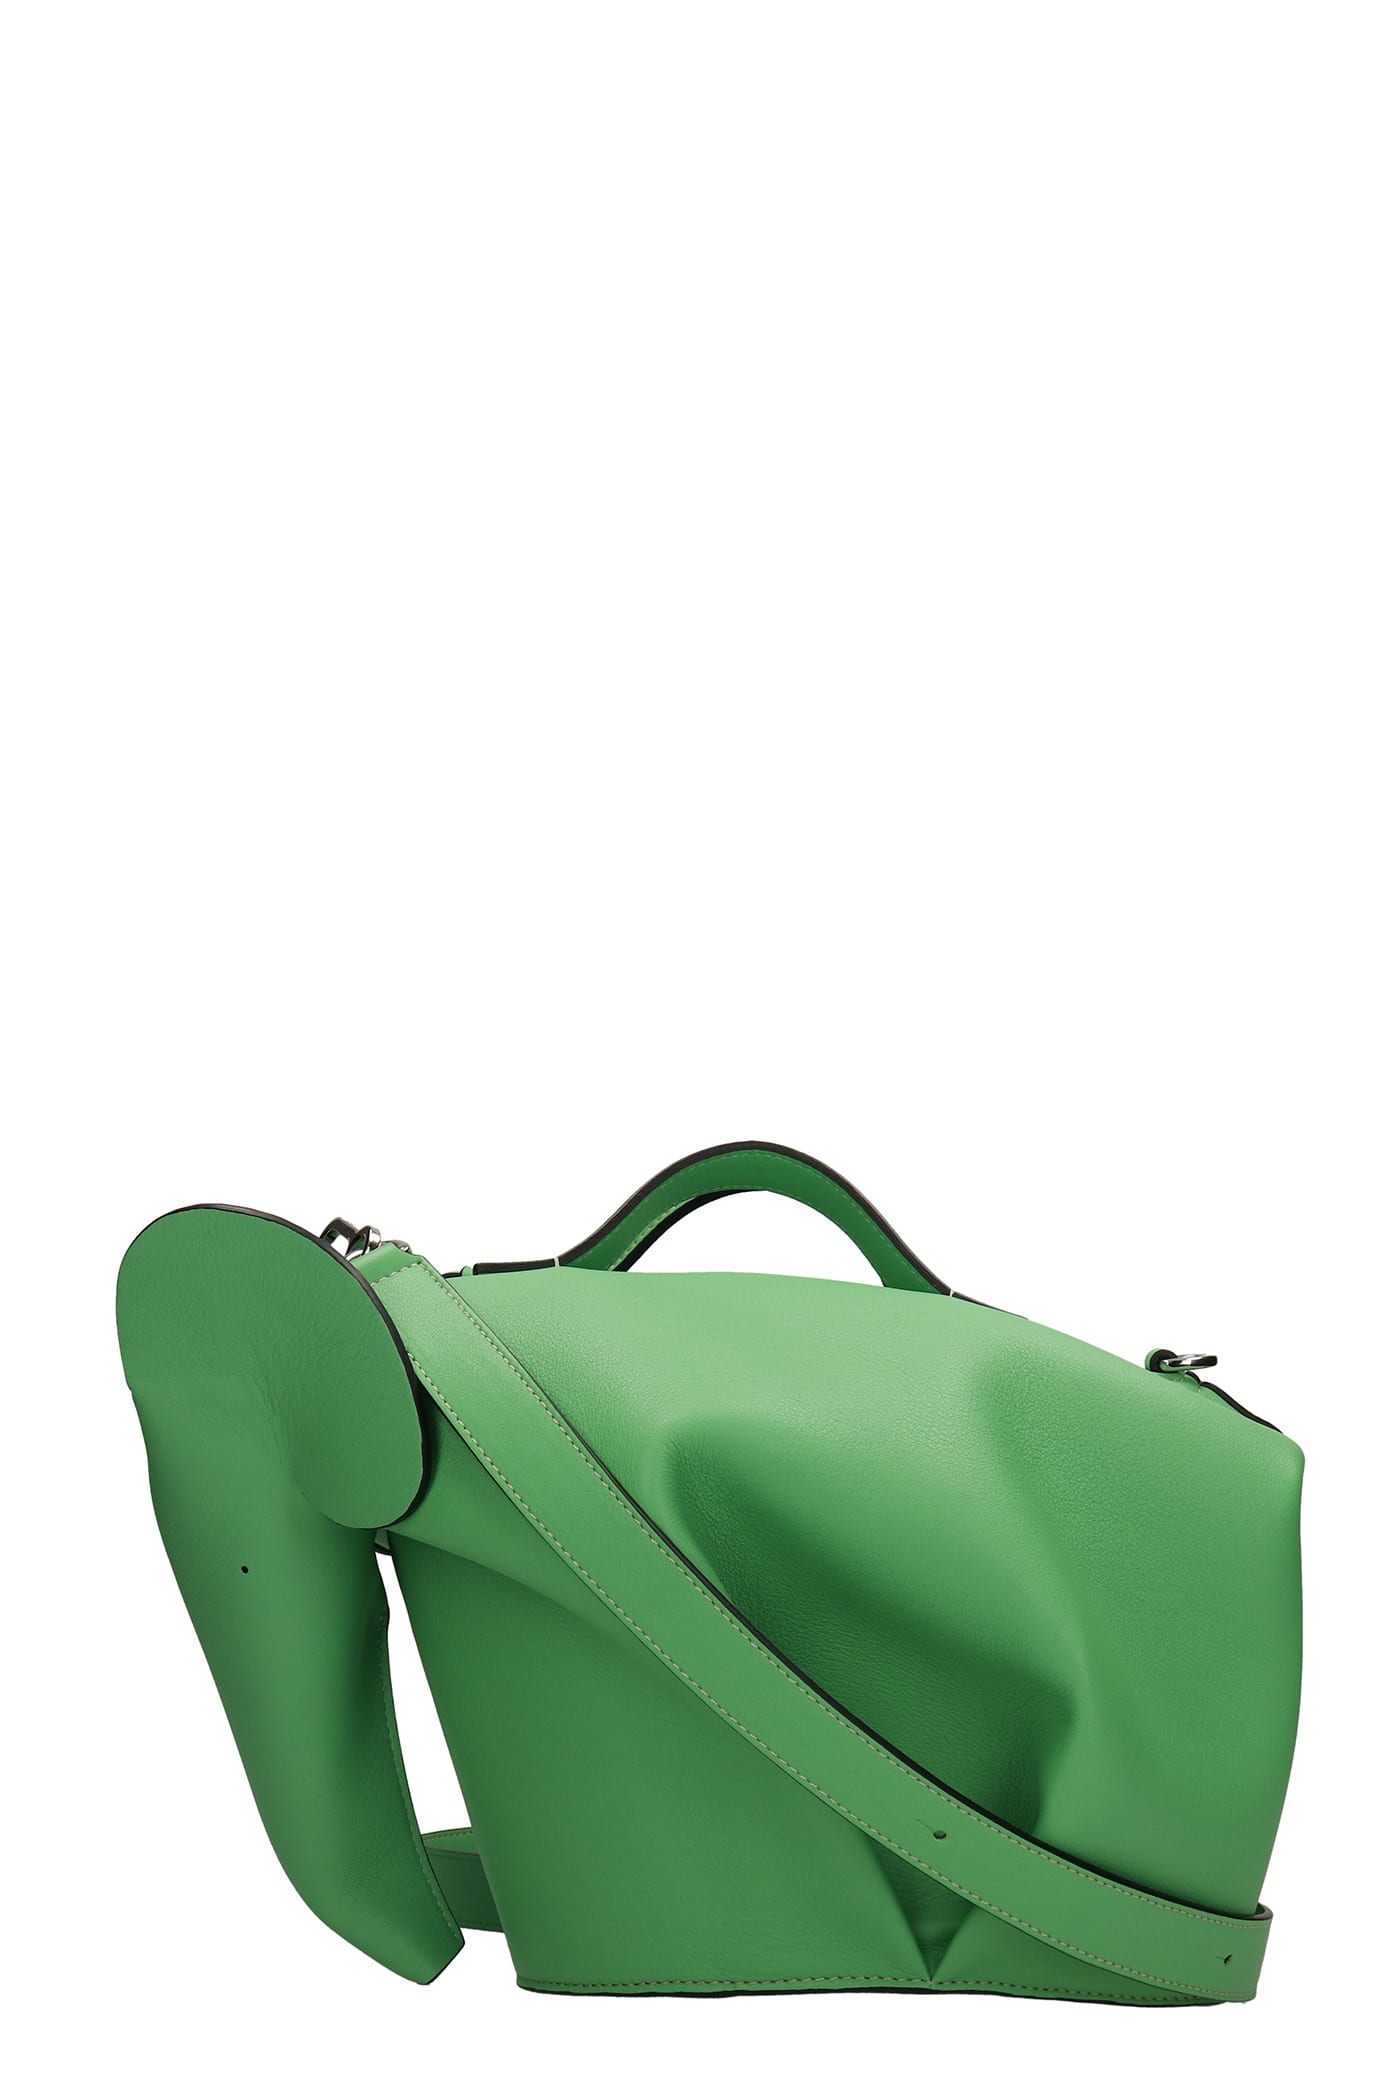 Loewe Hand Bag In Green Leather